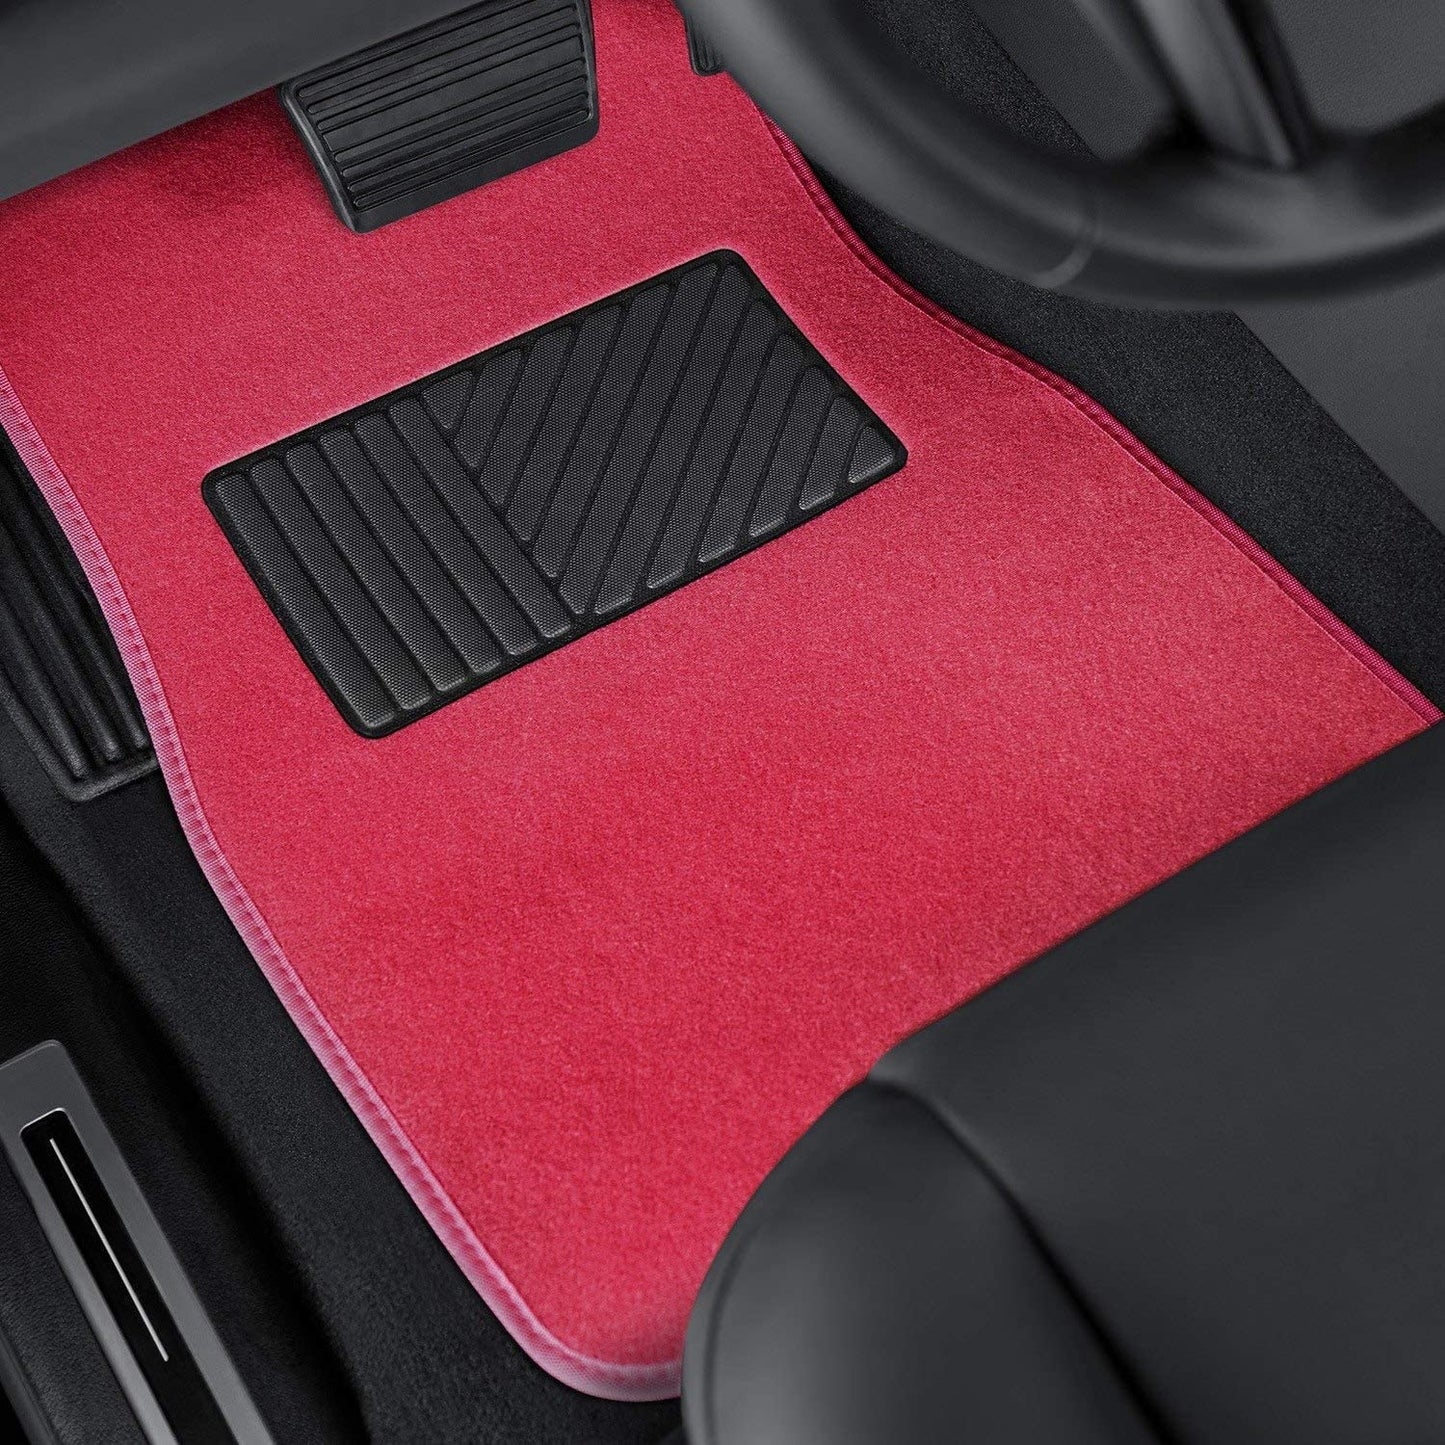 4pc Full Set Carpet Floor Mats, Universal Fit Mat for Car, SUV, Van Trucks - Front Rear, Driver Passenger Seat Beige